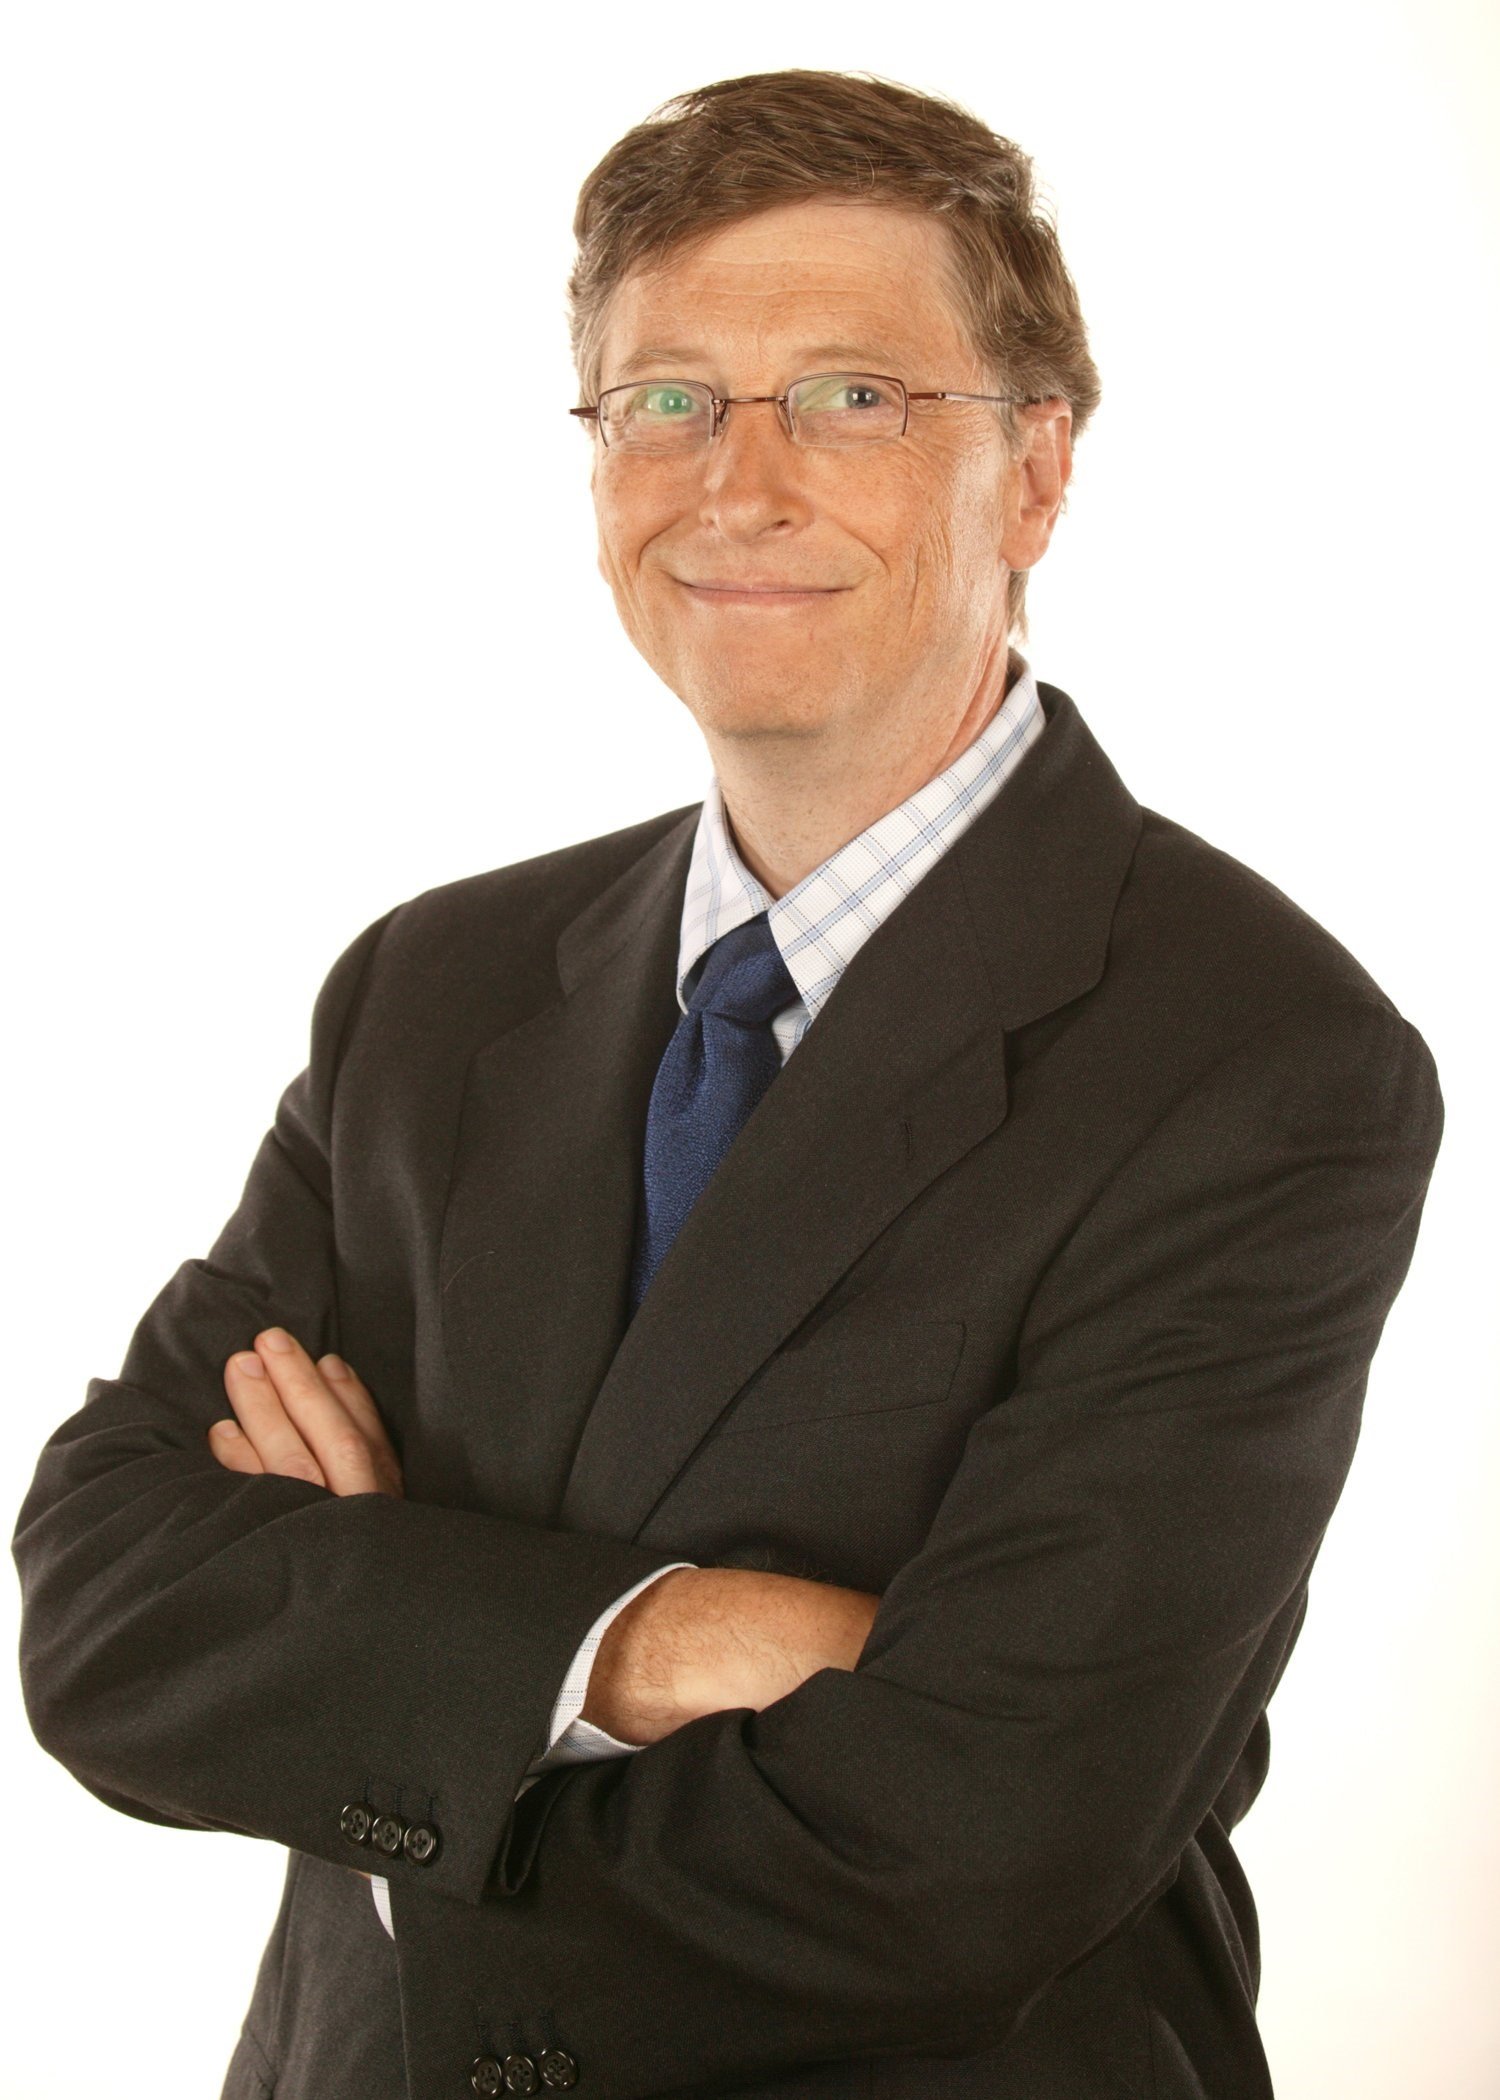 Bill Gates warns the world to prep for bio-terrorism